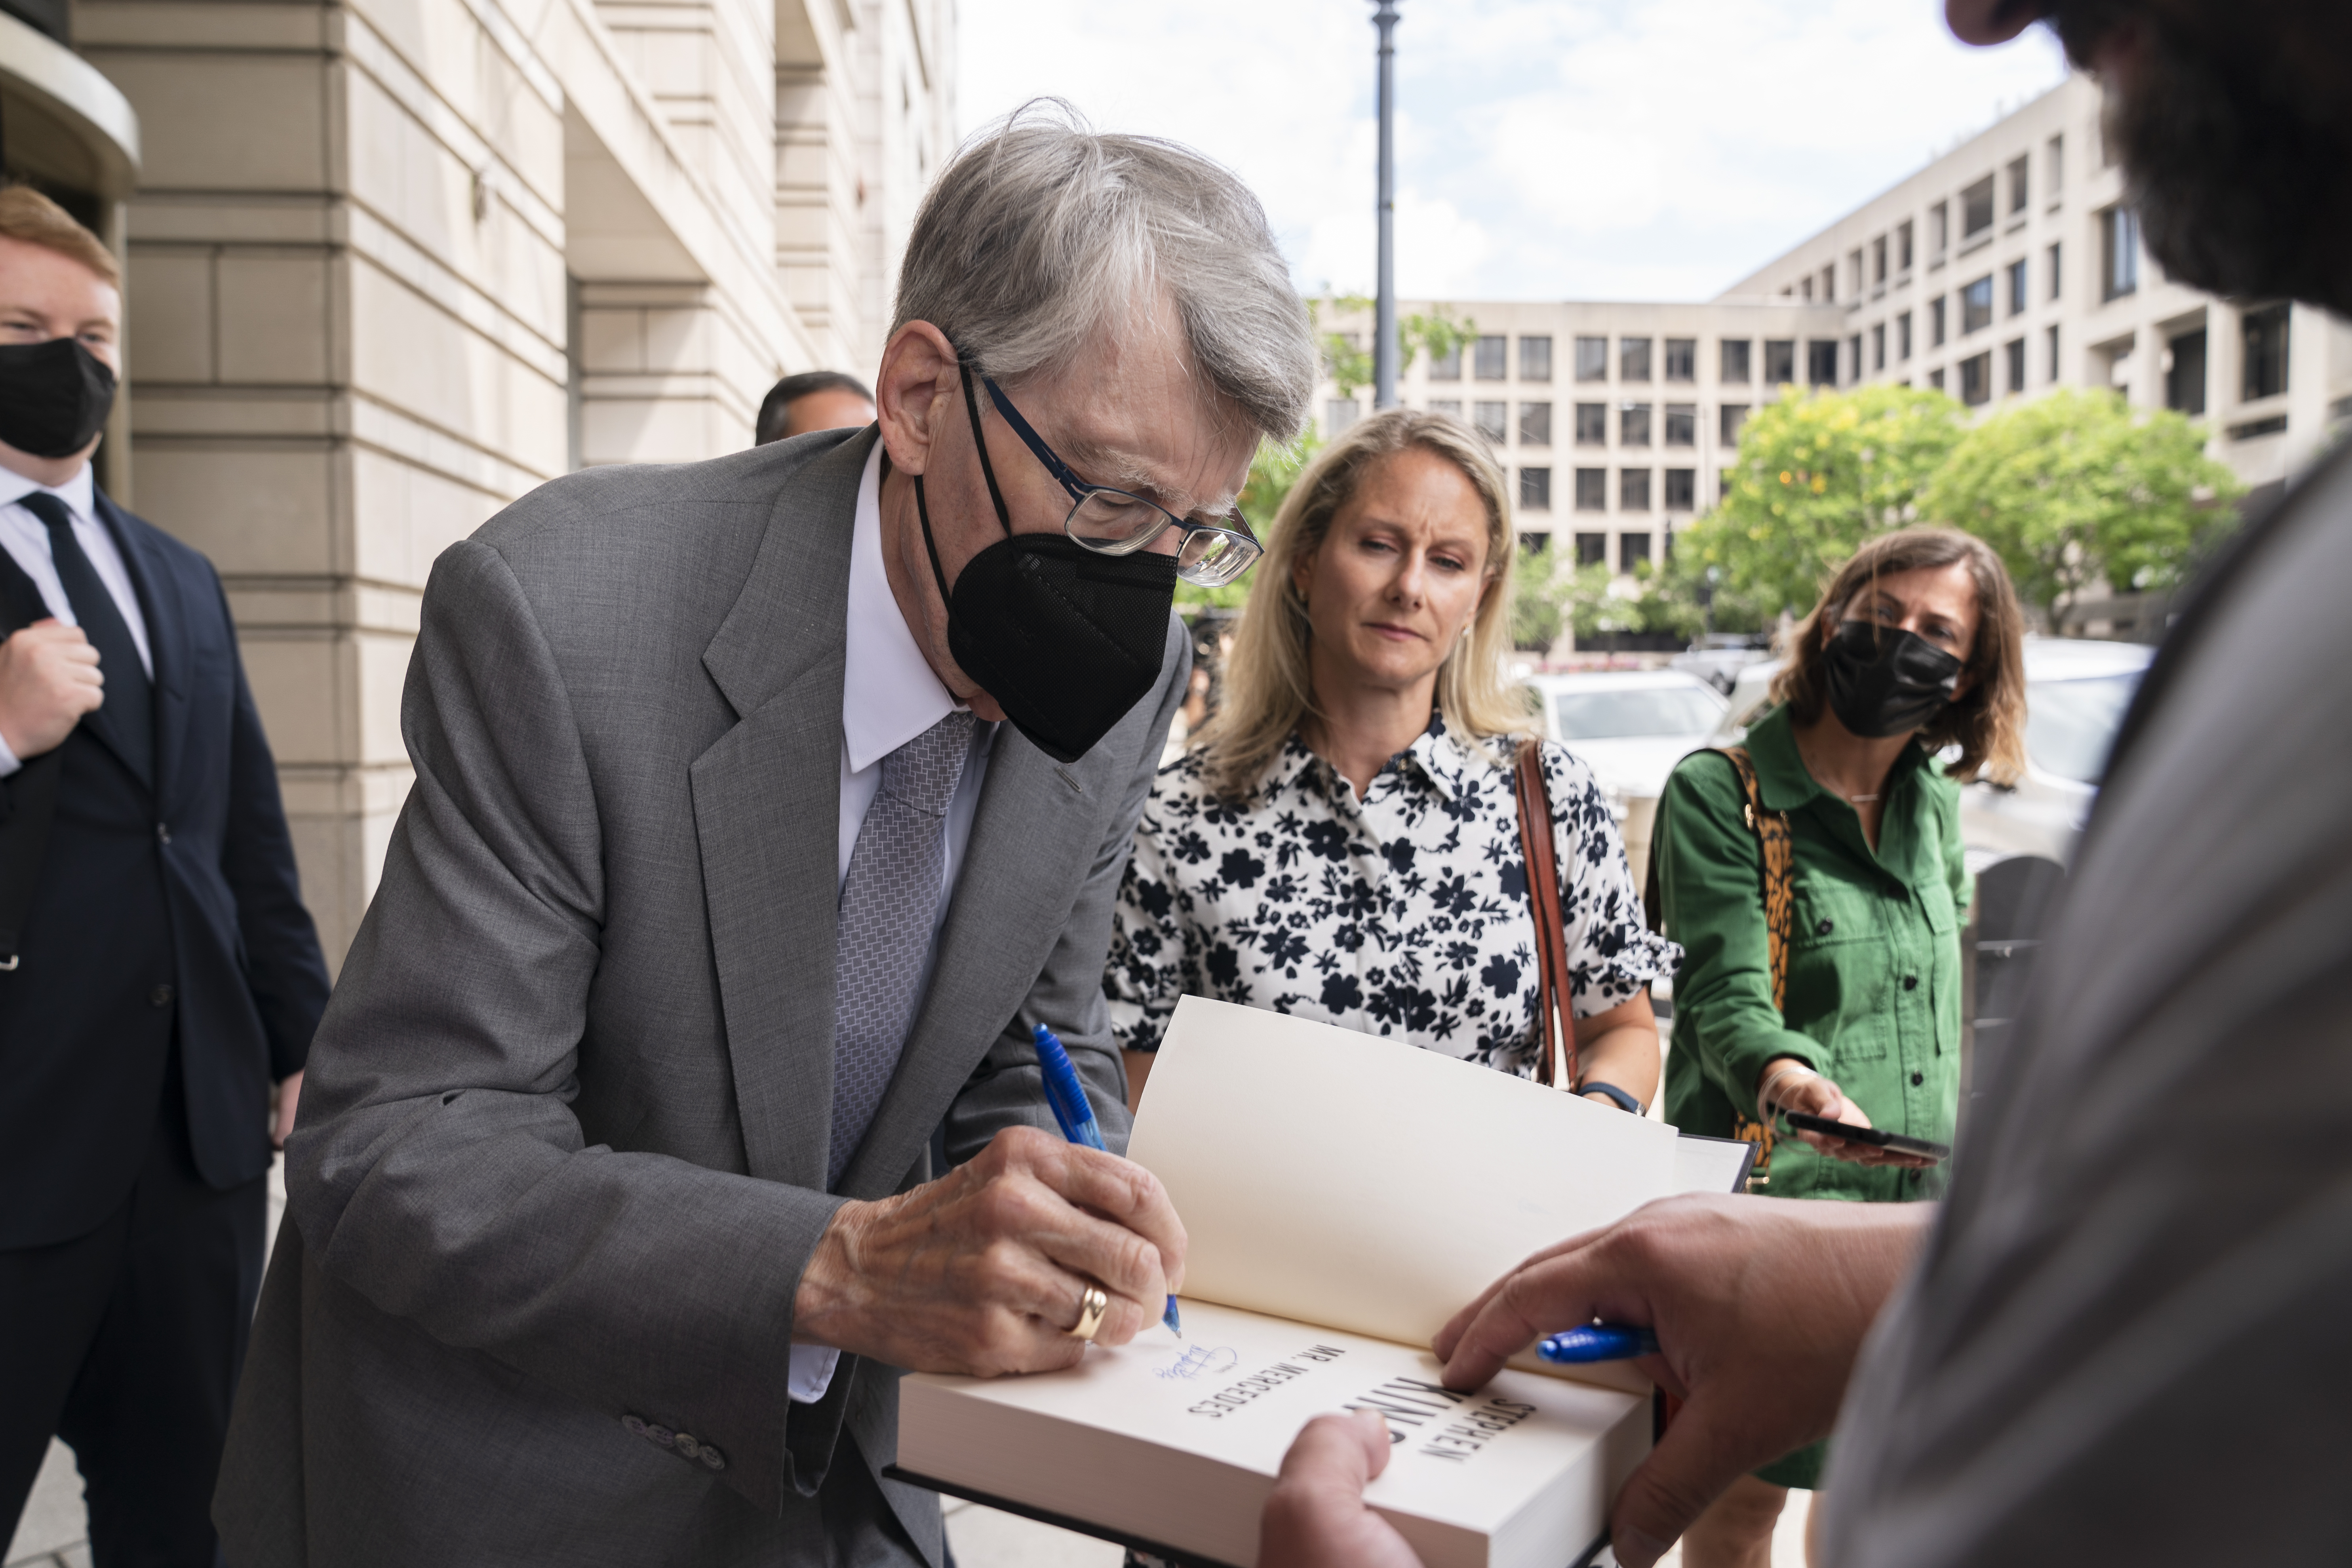 Stephen King Testifies in Simon & Schuster Antitrust Trial